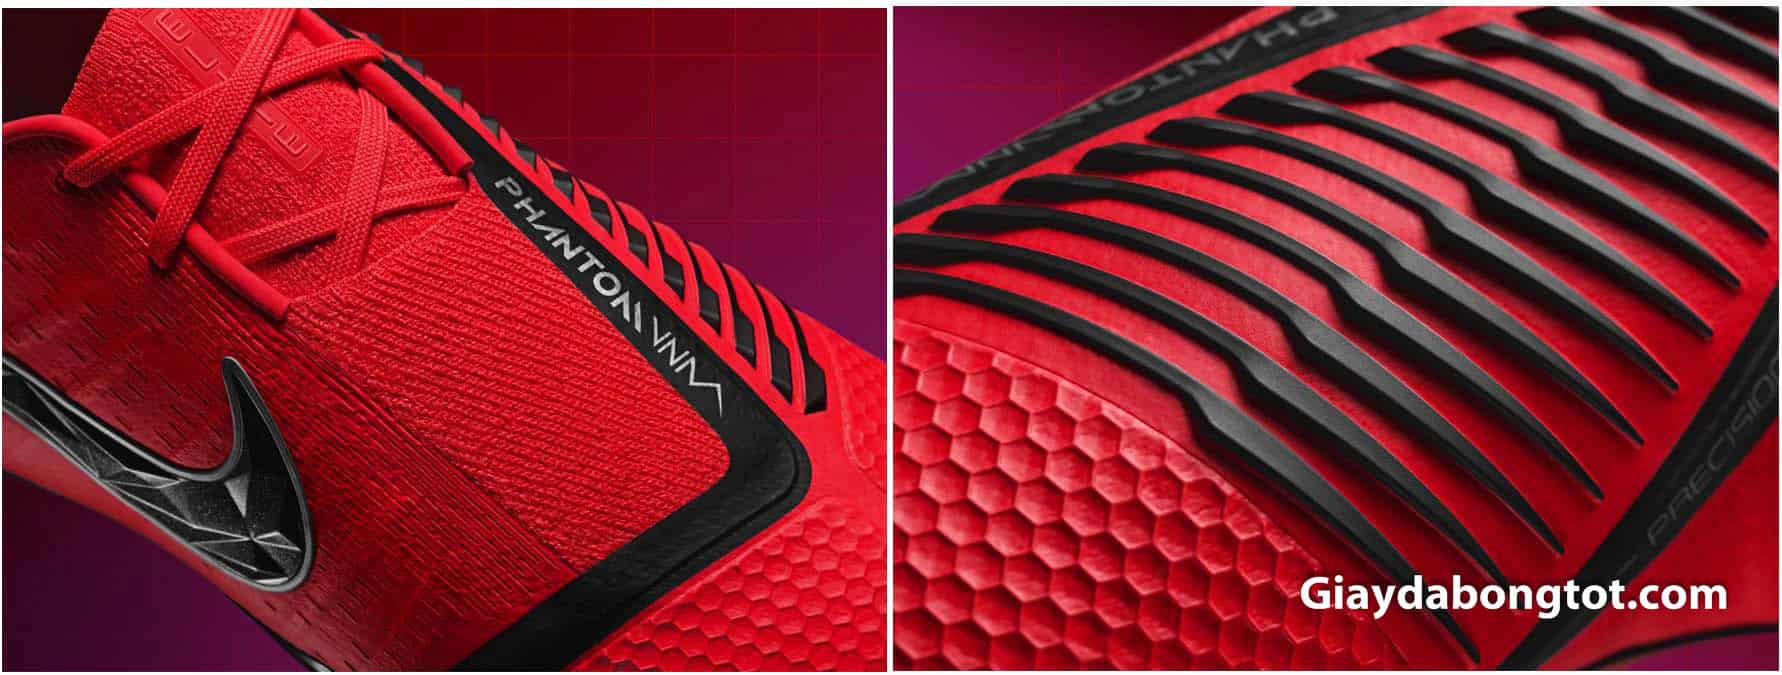 Giay da bong Nike Phantom Venom ra mat thay the cho giay Nike Hypervenom (32)